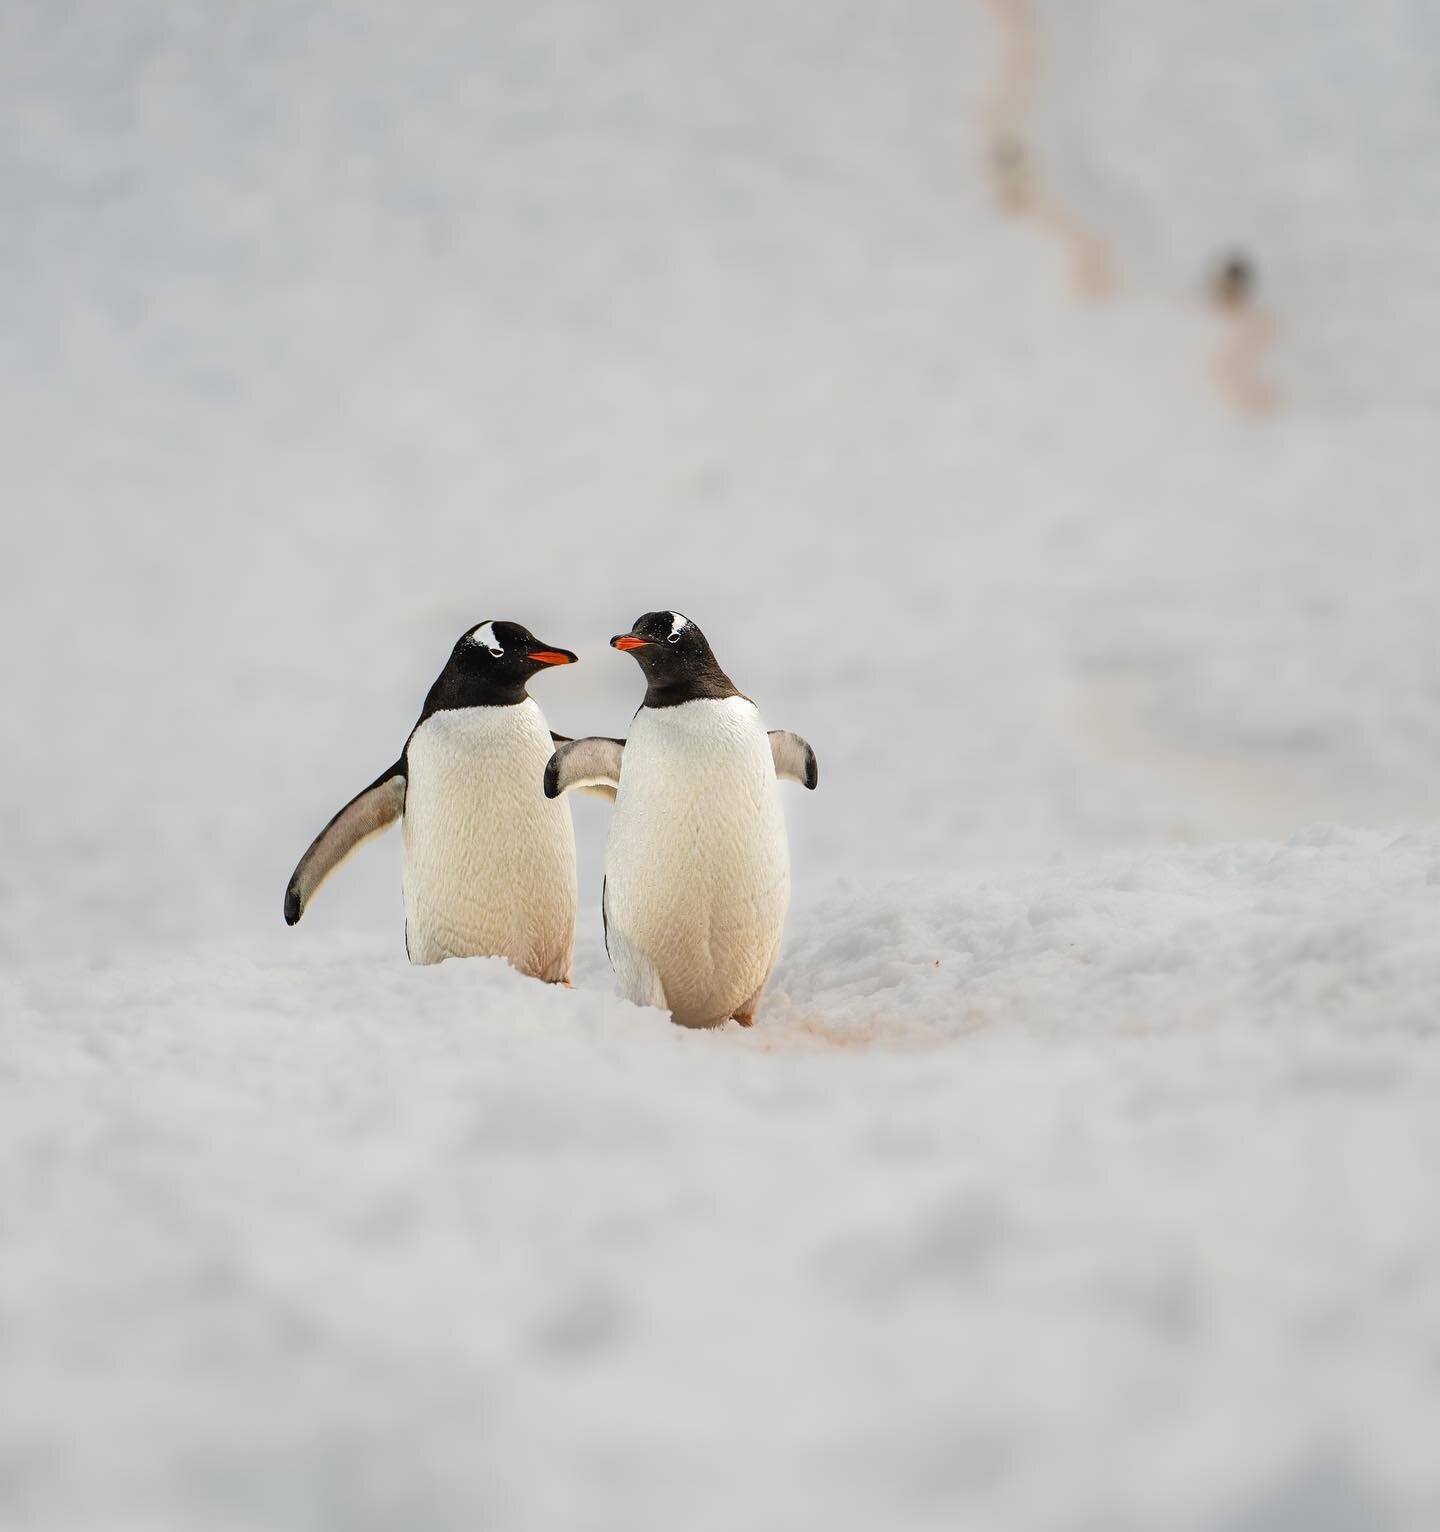 March of the Penguins 🐧
.
.

 #yourshotphotographer #natgeoyourshot #travelphotography #antarcticambassadors #britishantarcticsurvey #antarcticpenguins #traveltheworld #naturephotography #wildlifephotography #wildlife #nature #sony #sonyA1 #sonyA7r4